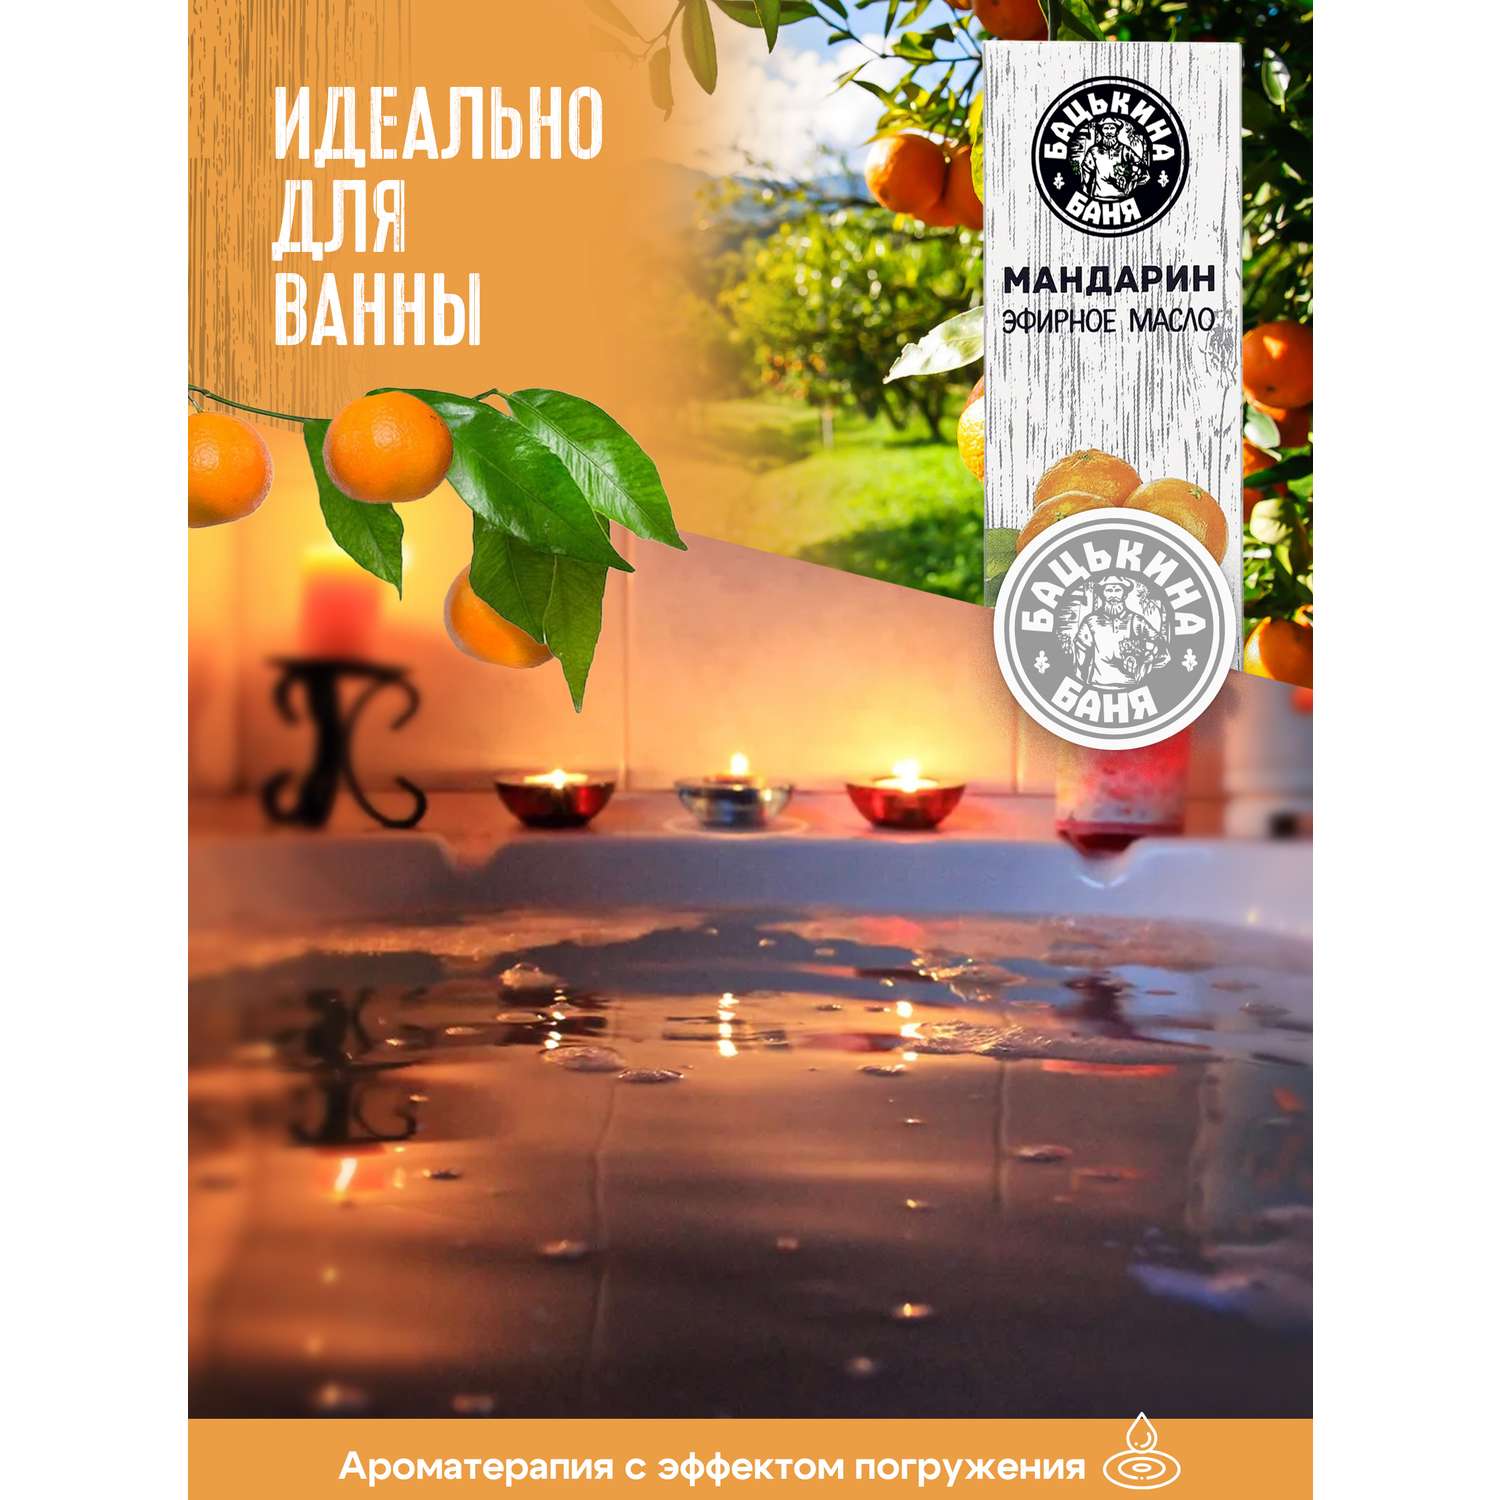 Эфирное масло Бацькина баня Мандарин 10 мл - фото 8